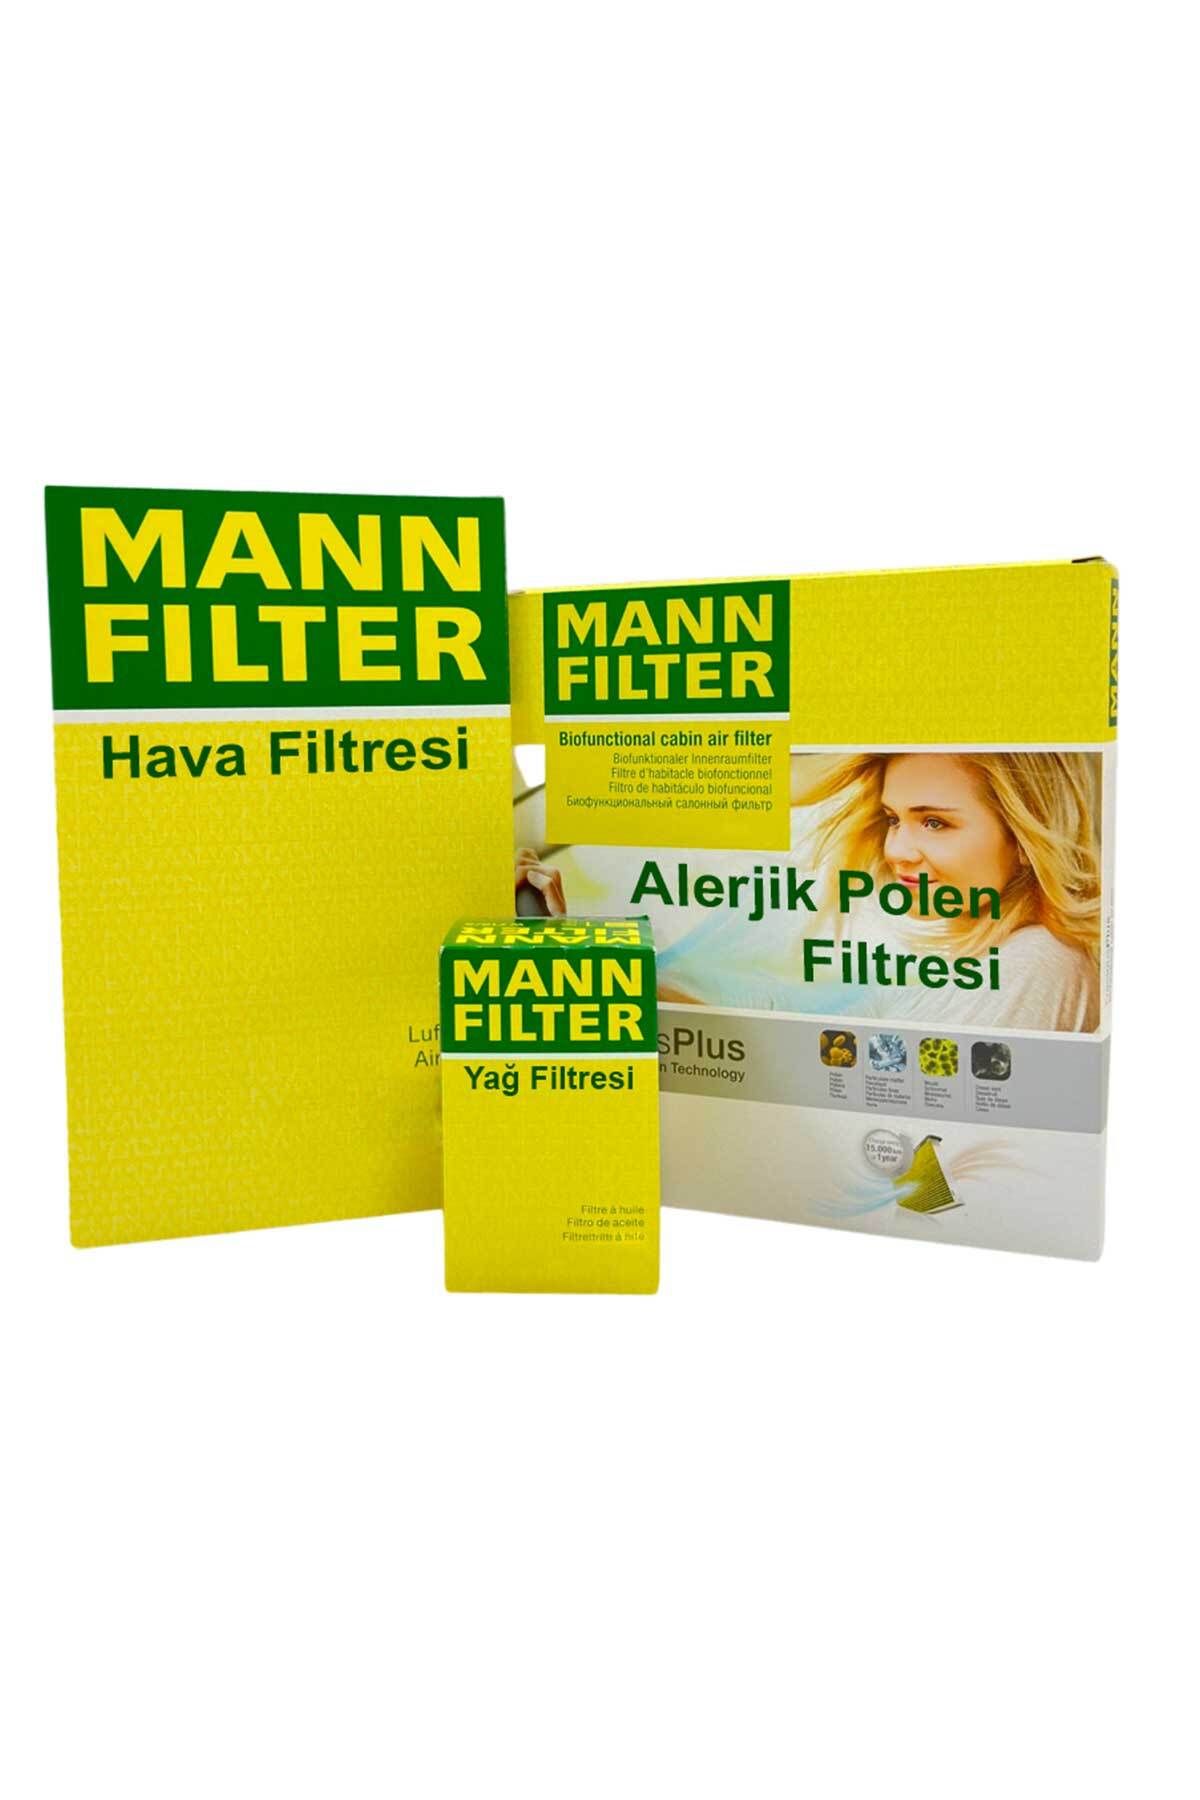 Mann Filter Ford Focus 3 1.6 SCTi Ecoboost MANN Filtre Bakım Seti Hava+Yağ+A.Alerjik Polen